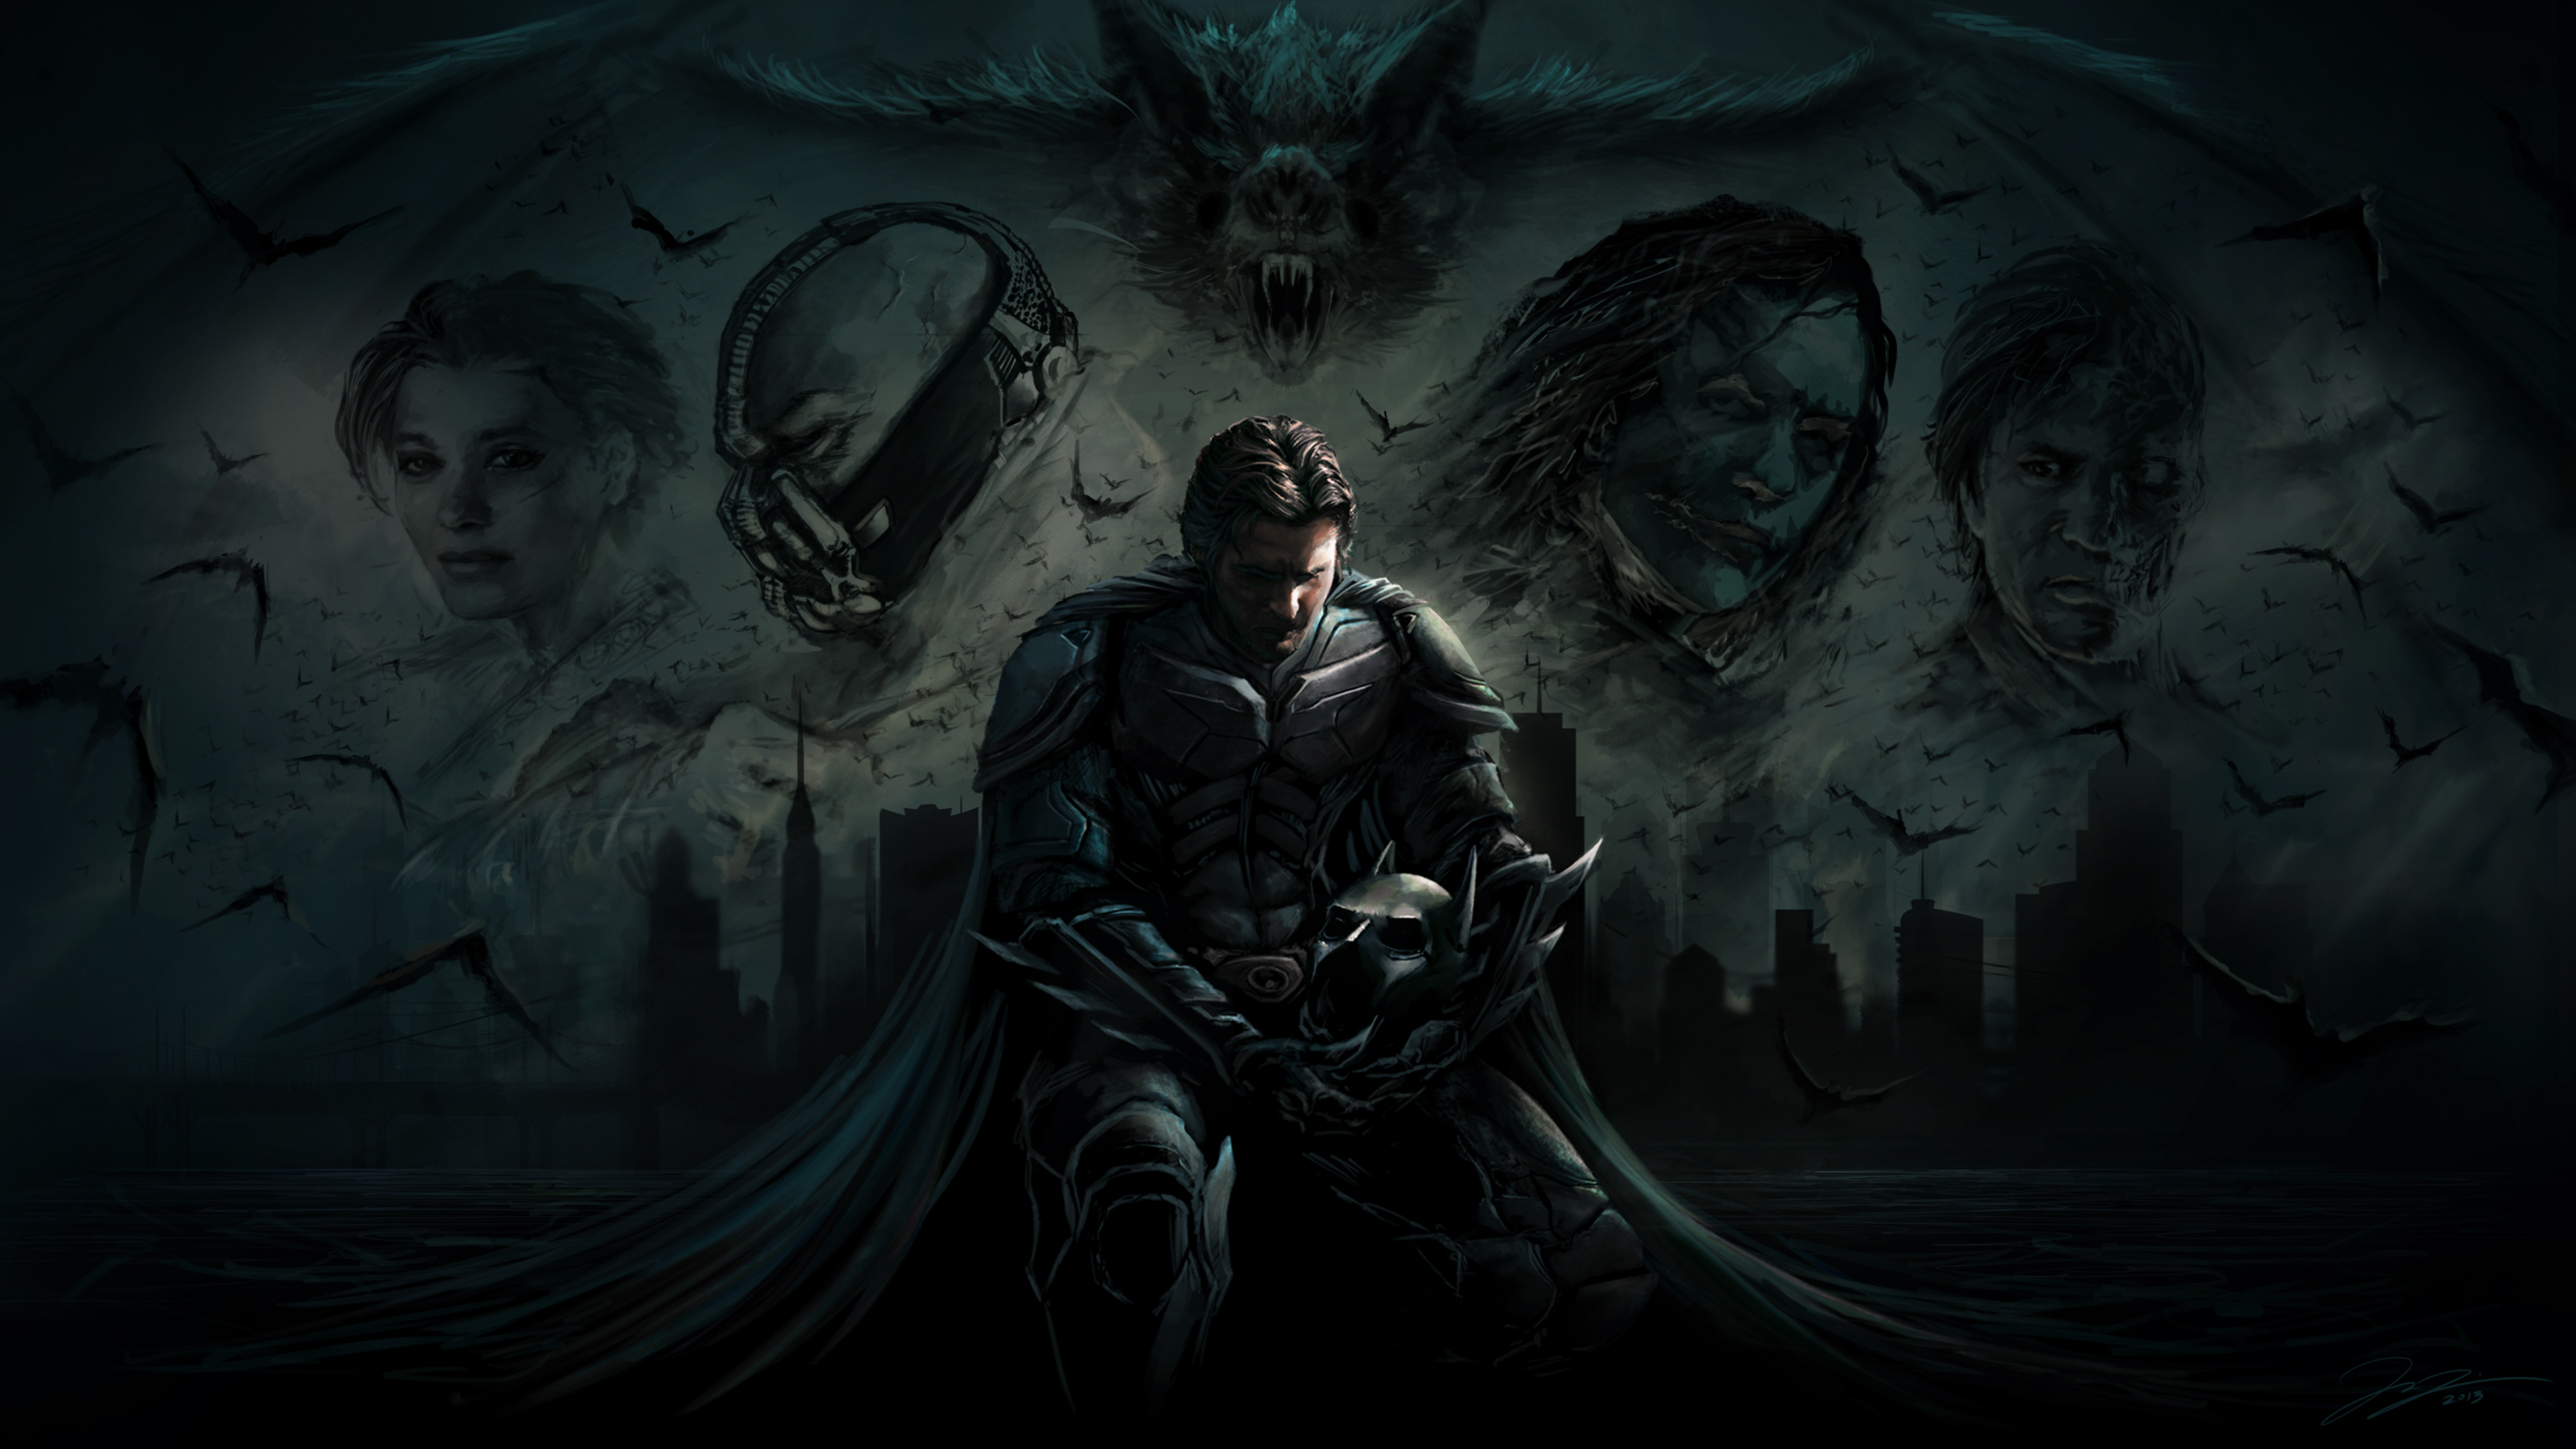 Justice in the dark. Бэтмен рыцарь тьмы. Бэтмен темный рыцарь. Темный рыцарь трилогия.